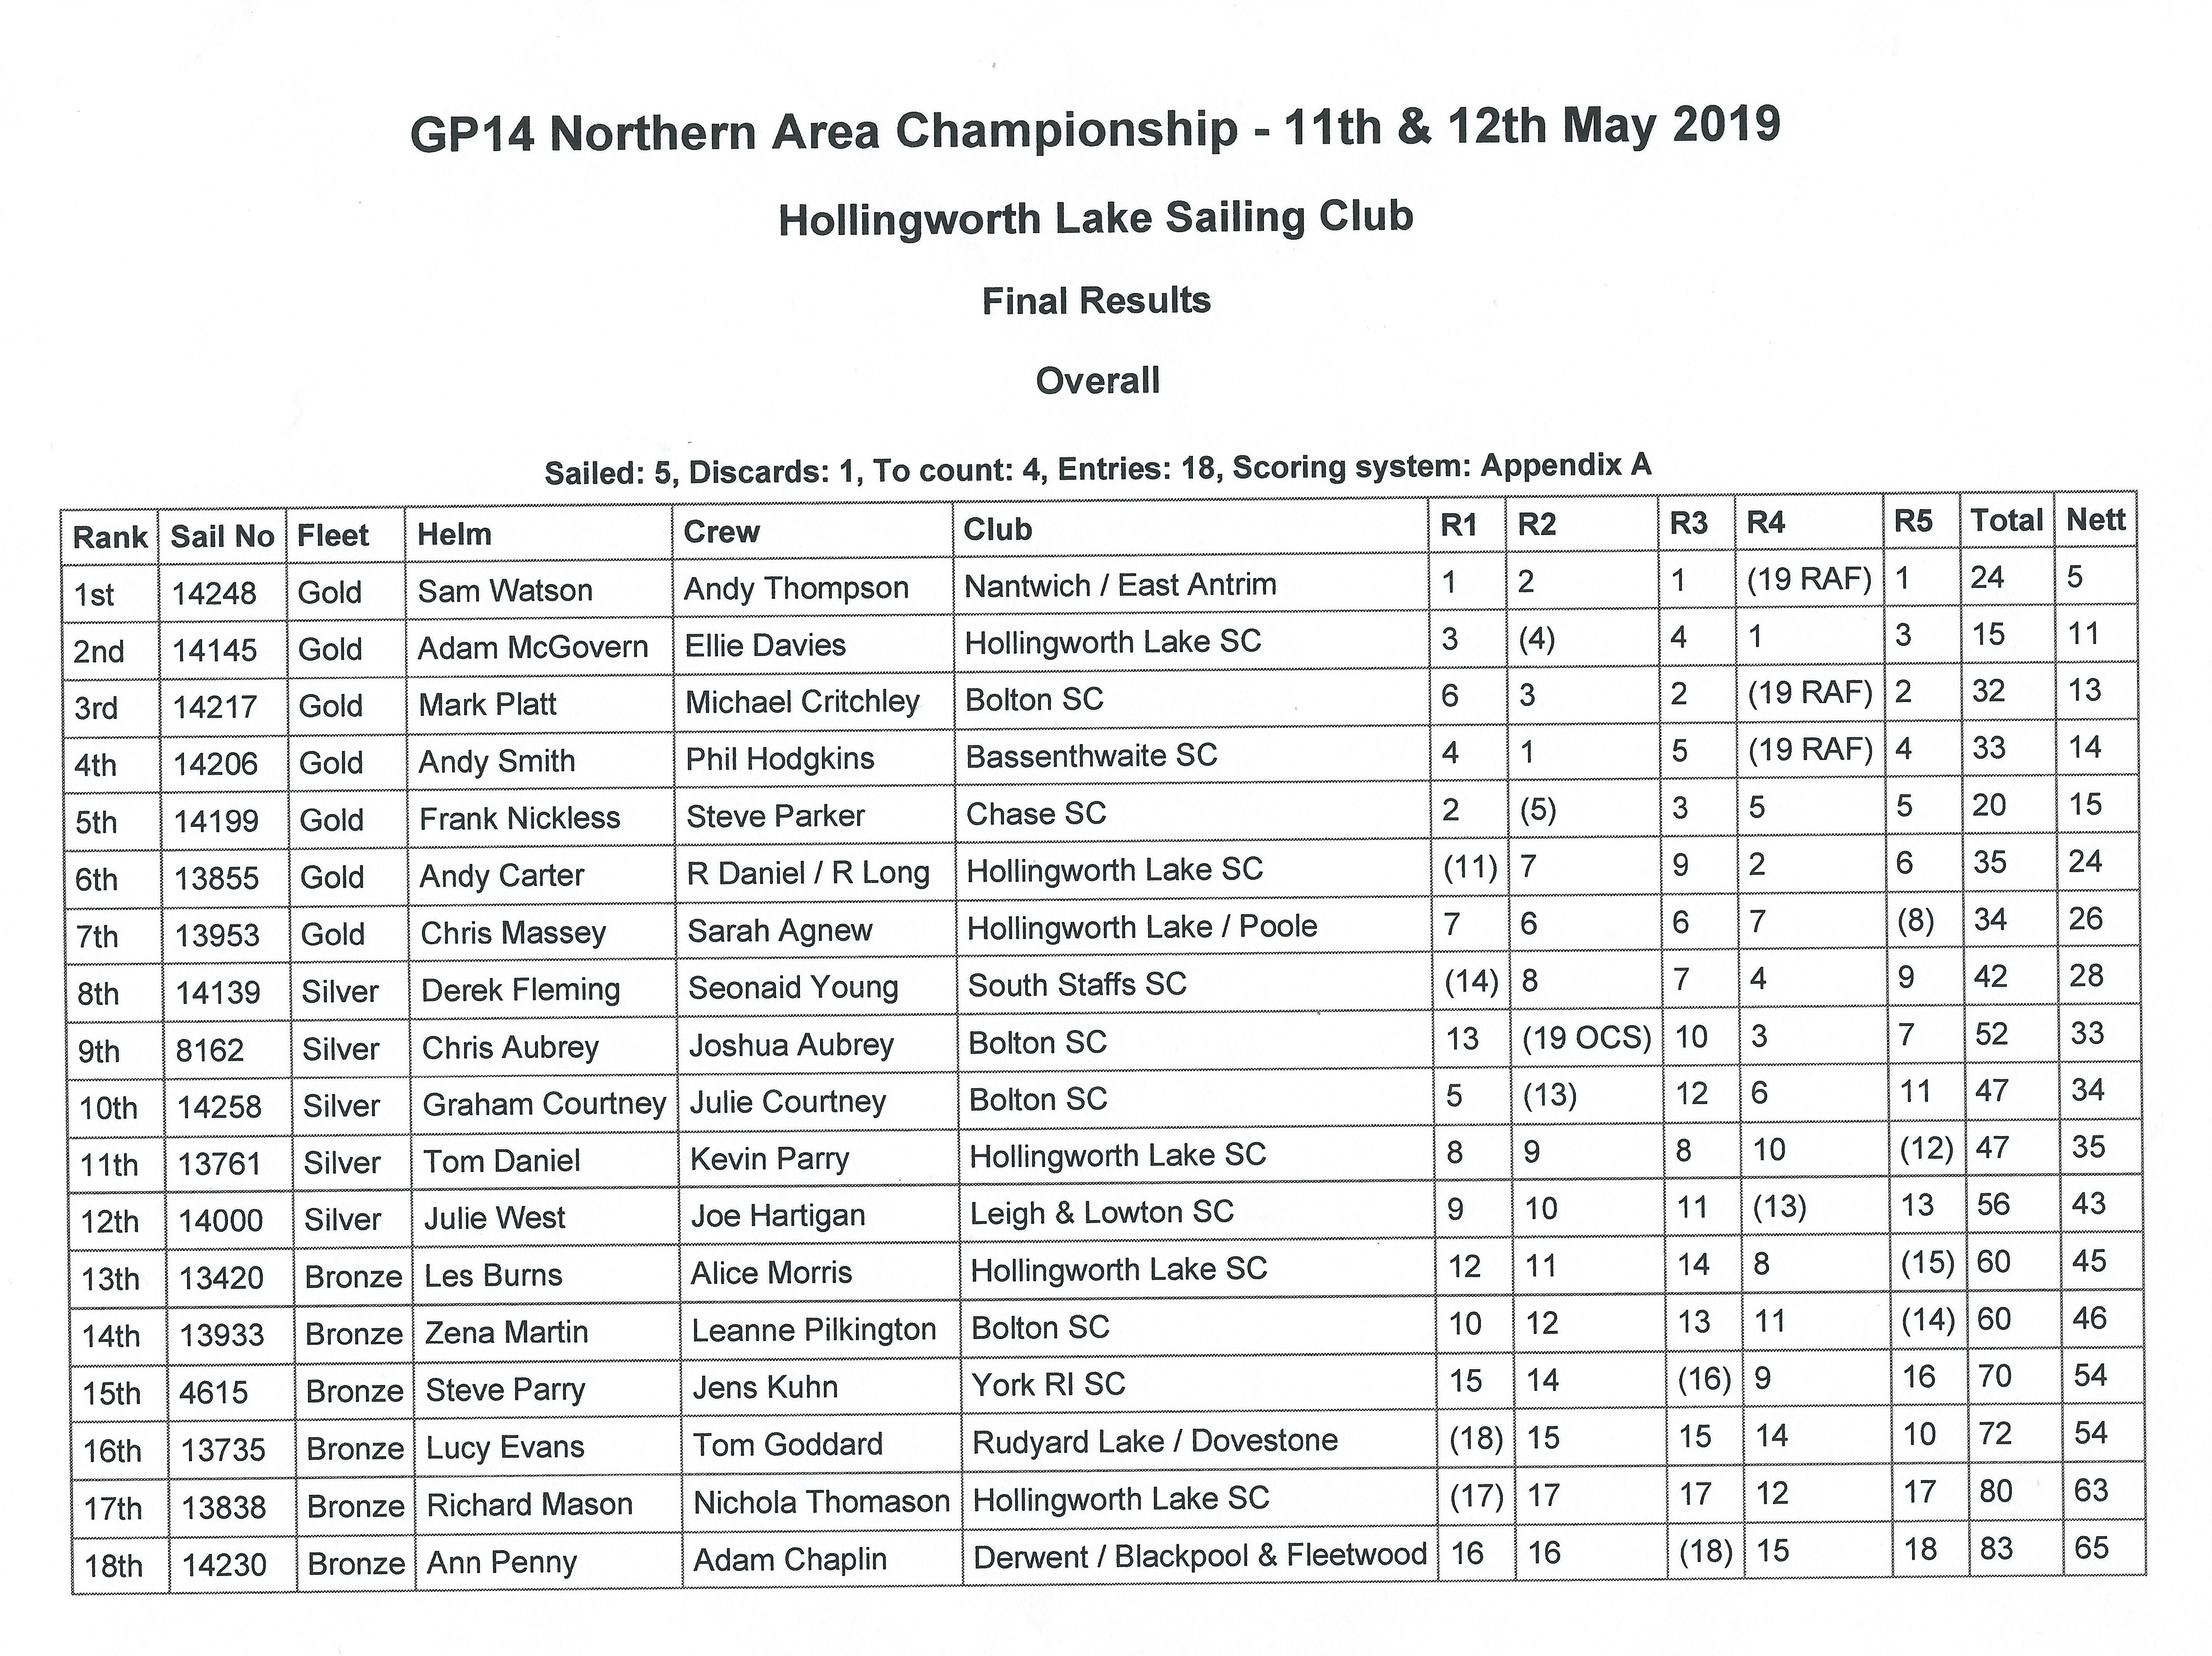 GP14 Northern Championship 2019